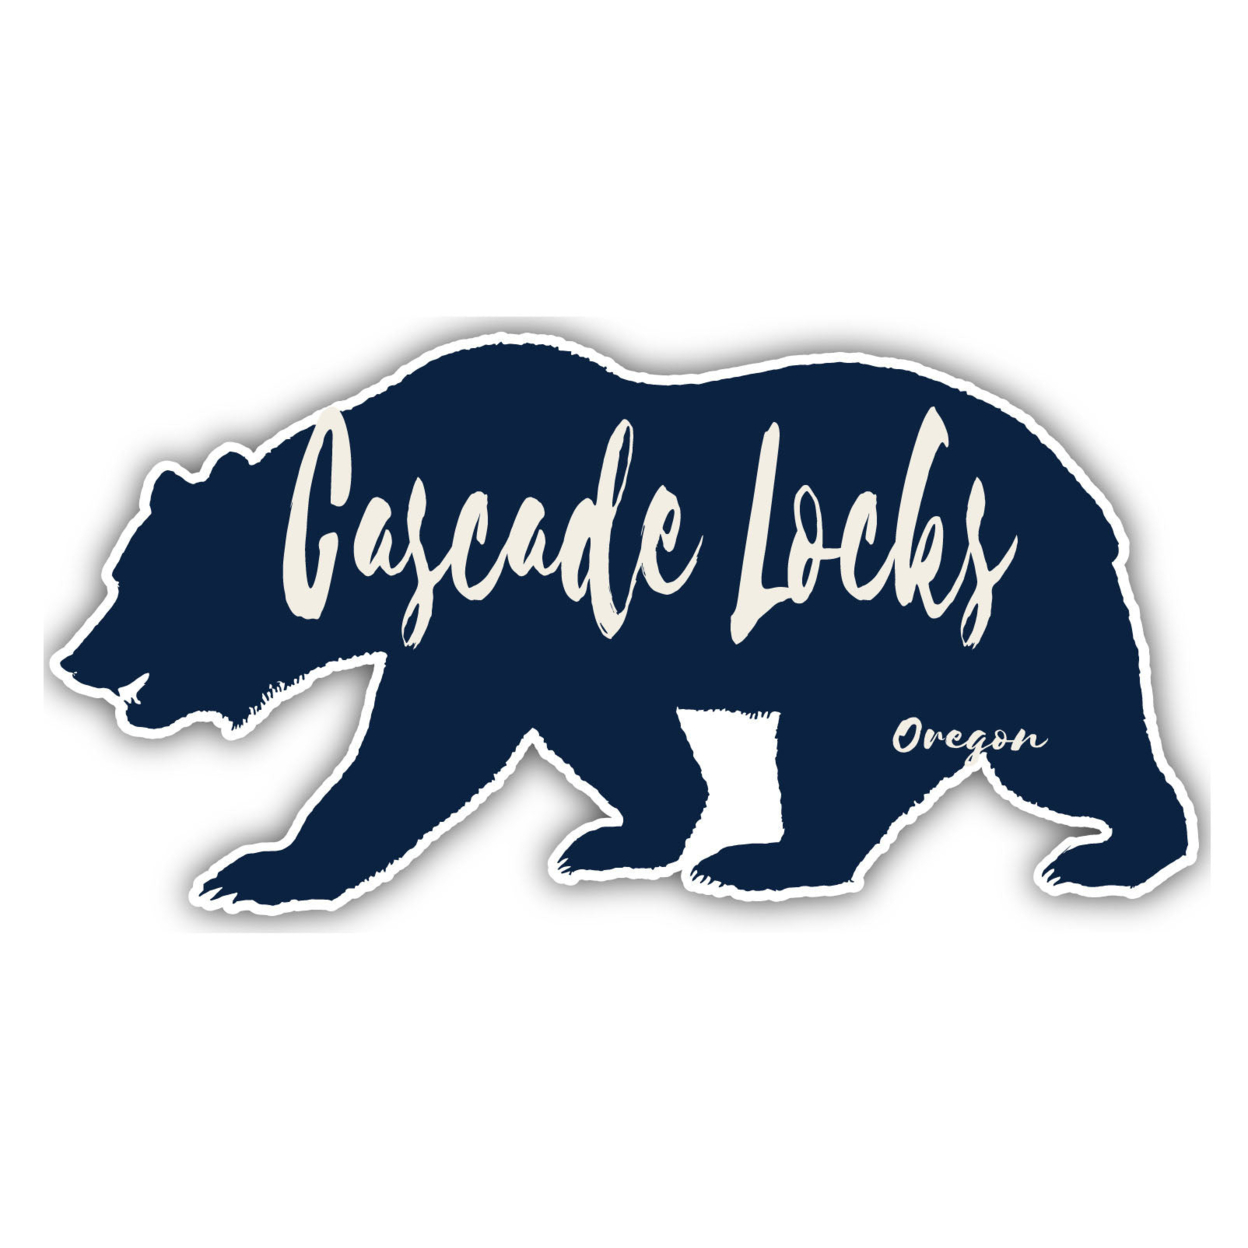 Cascade Locks Oregon Souvenir Decorative Stickers (Choose Theme And Size) - 4-Pack, 12-Inch, Tent